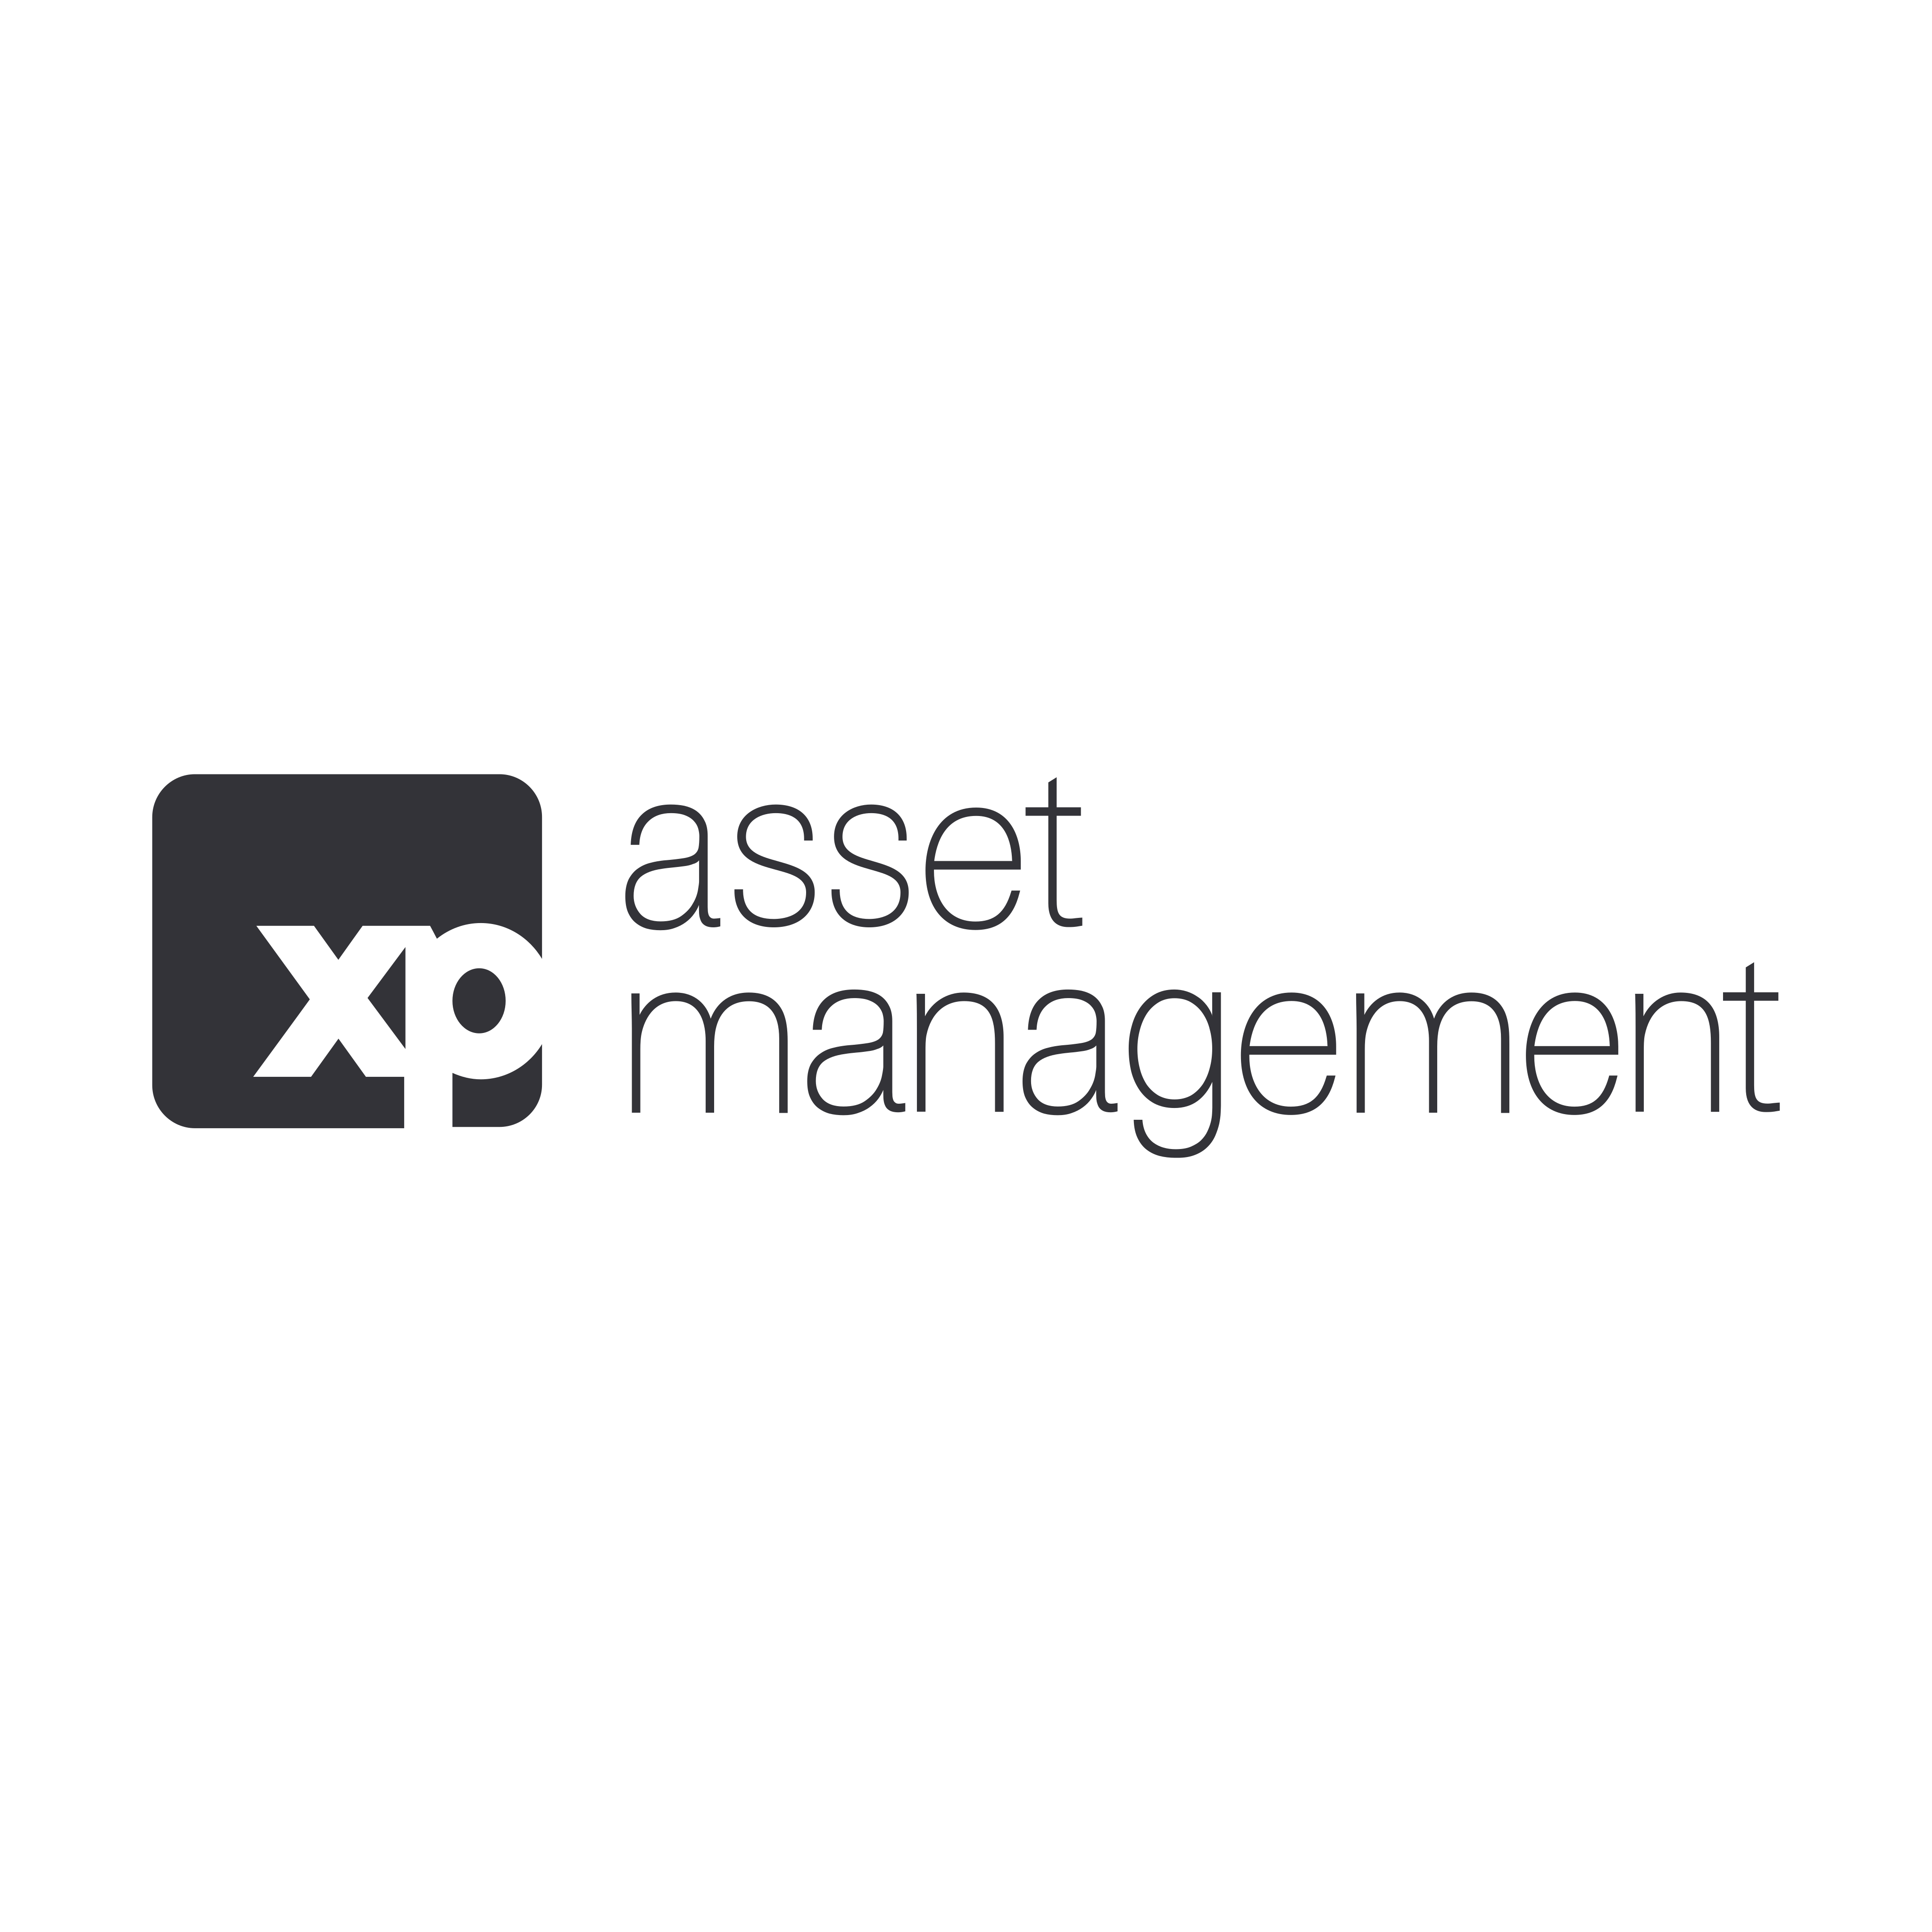 XP Asset Management Logo PNG.